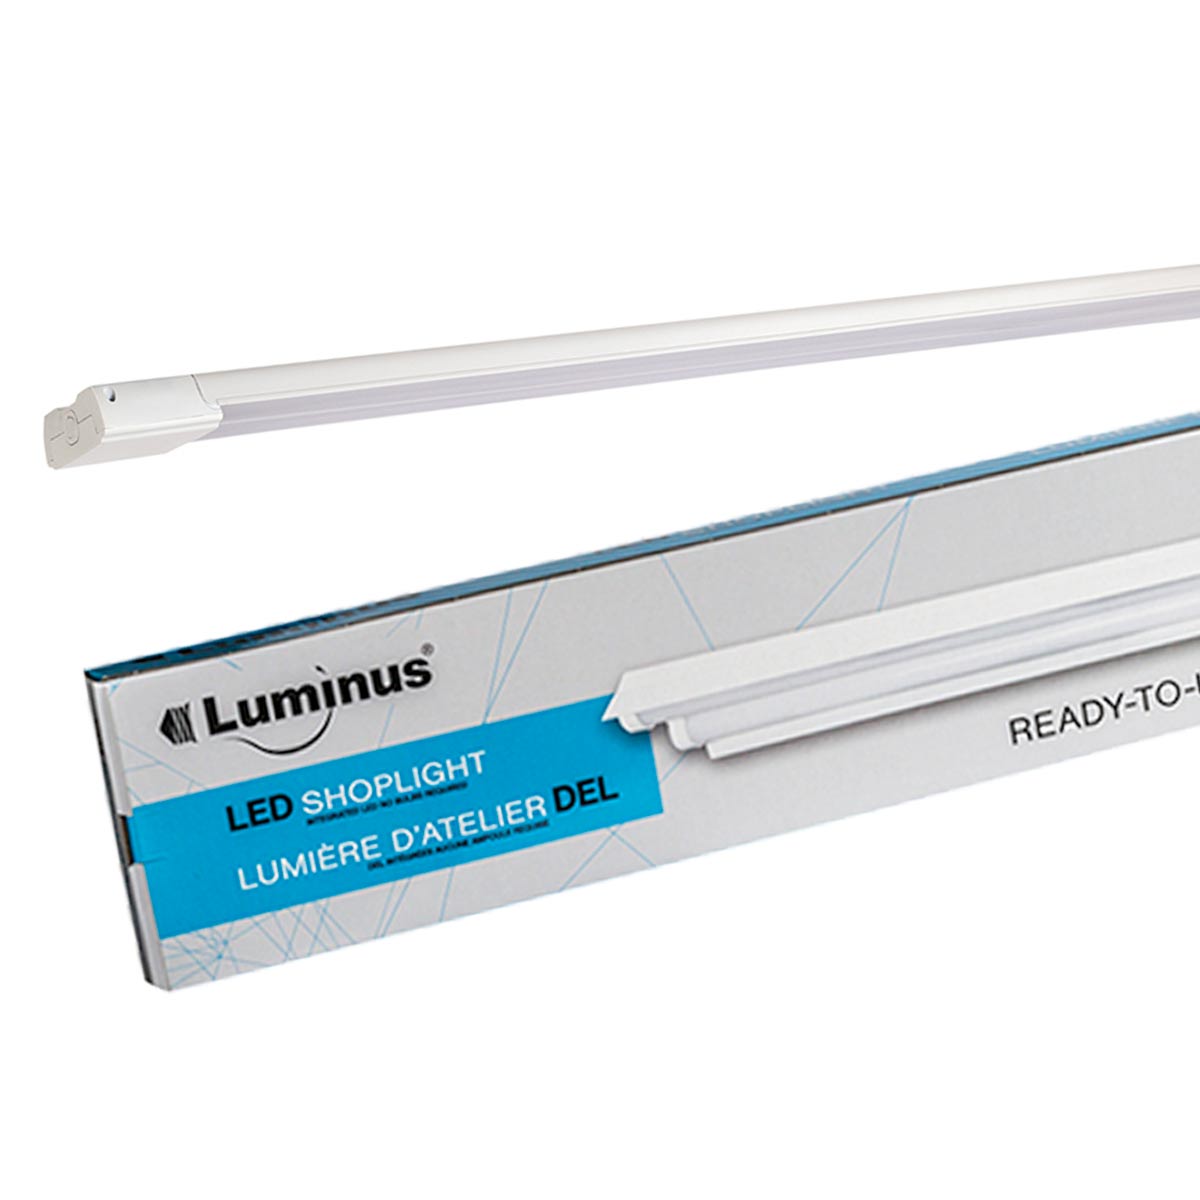 Luminus LED 40 W Shoplight